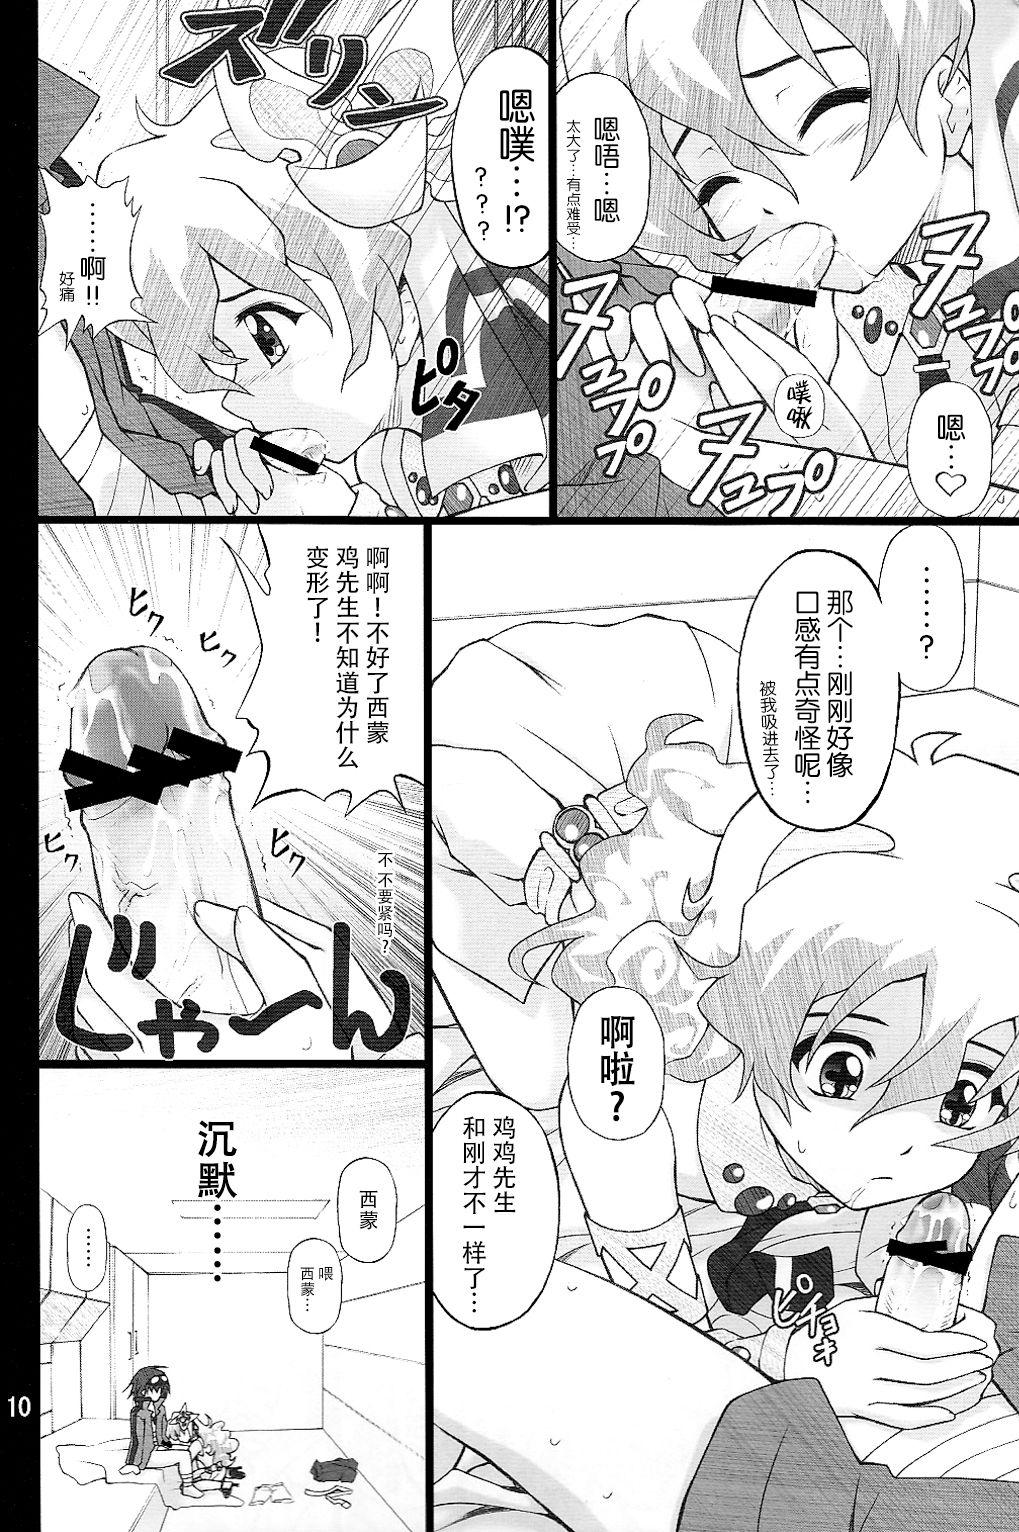 From Oikari Nia-chan - Tengen toppa gurren lagann Foreplay - Page 11